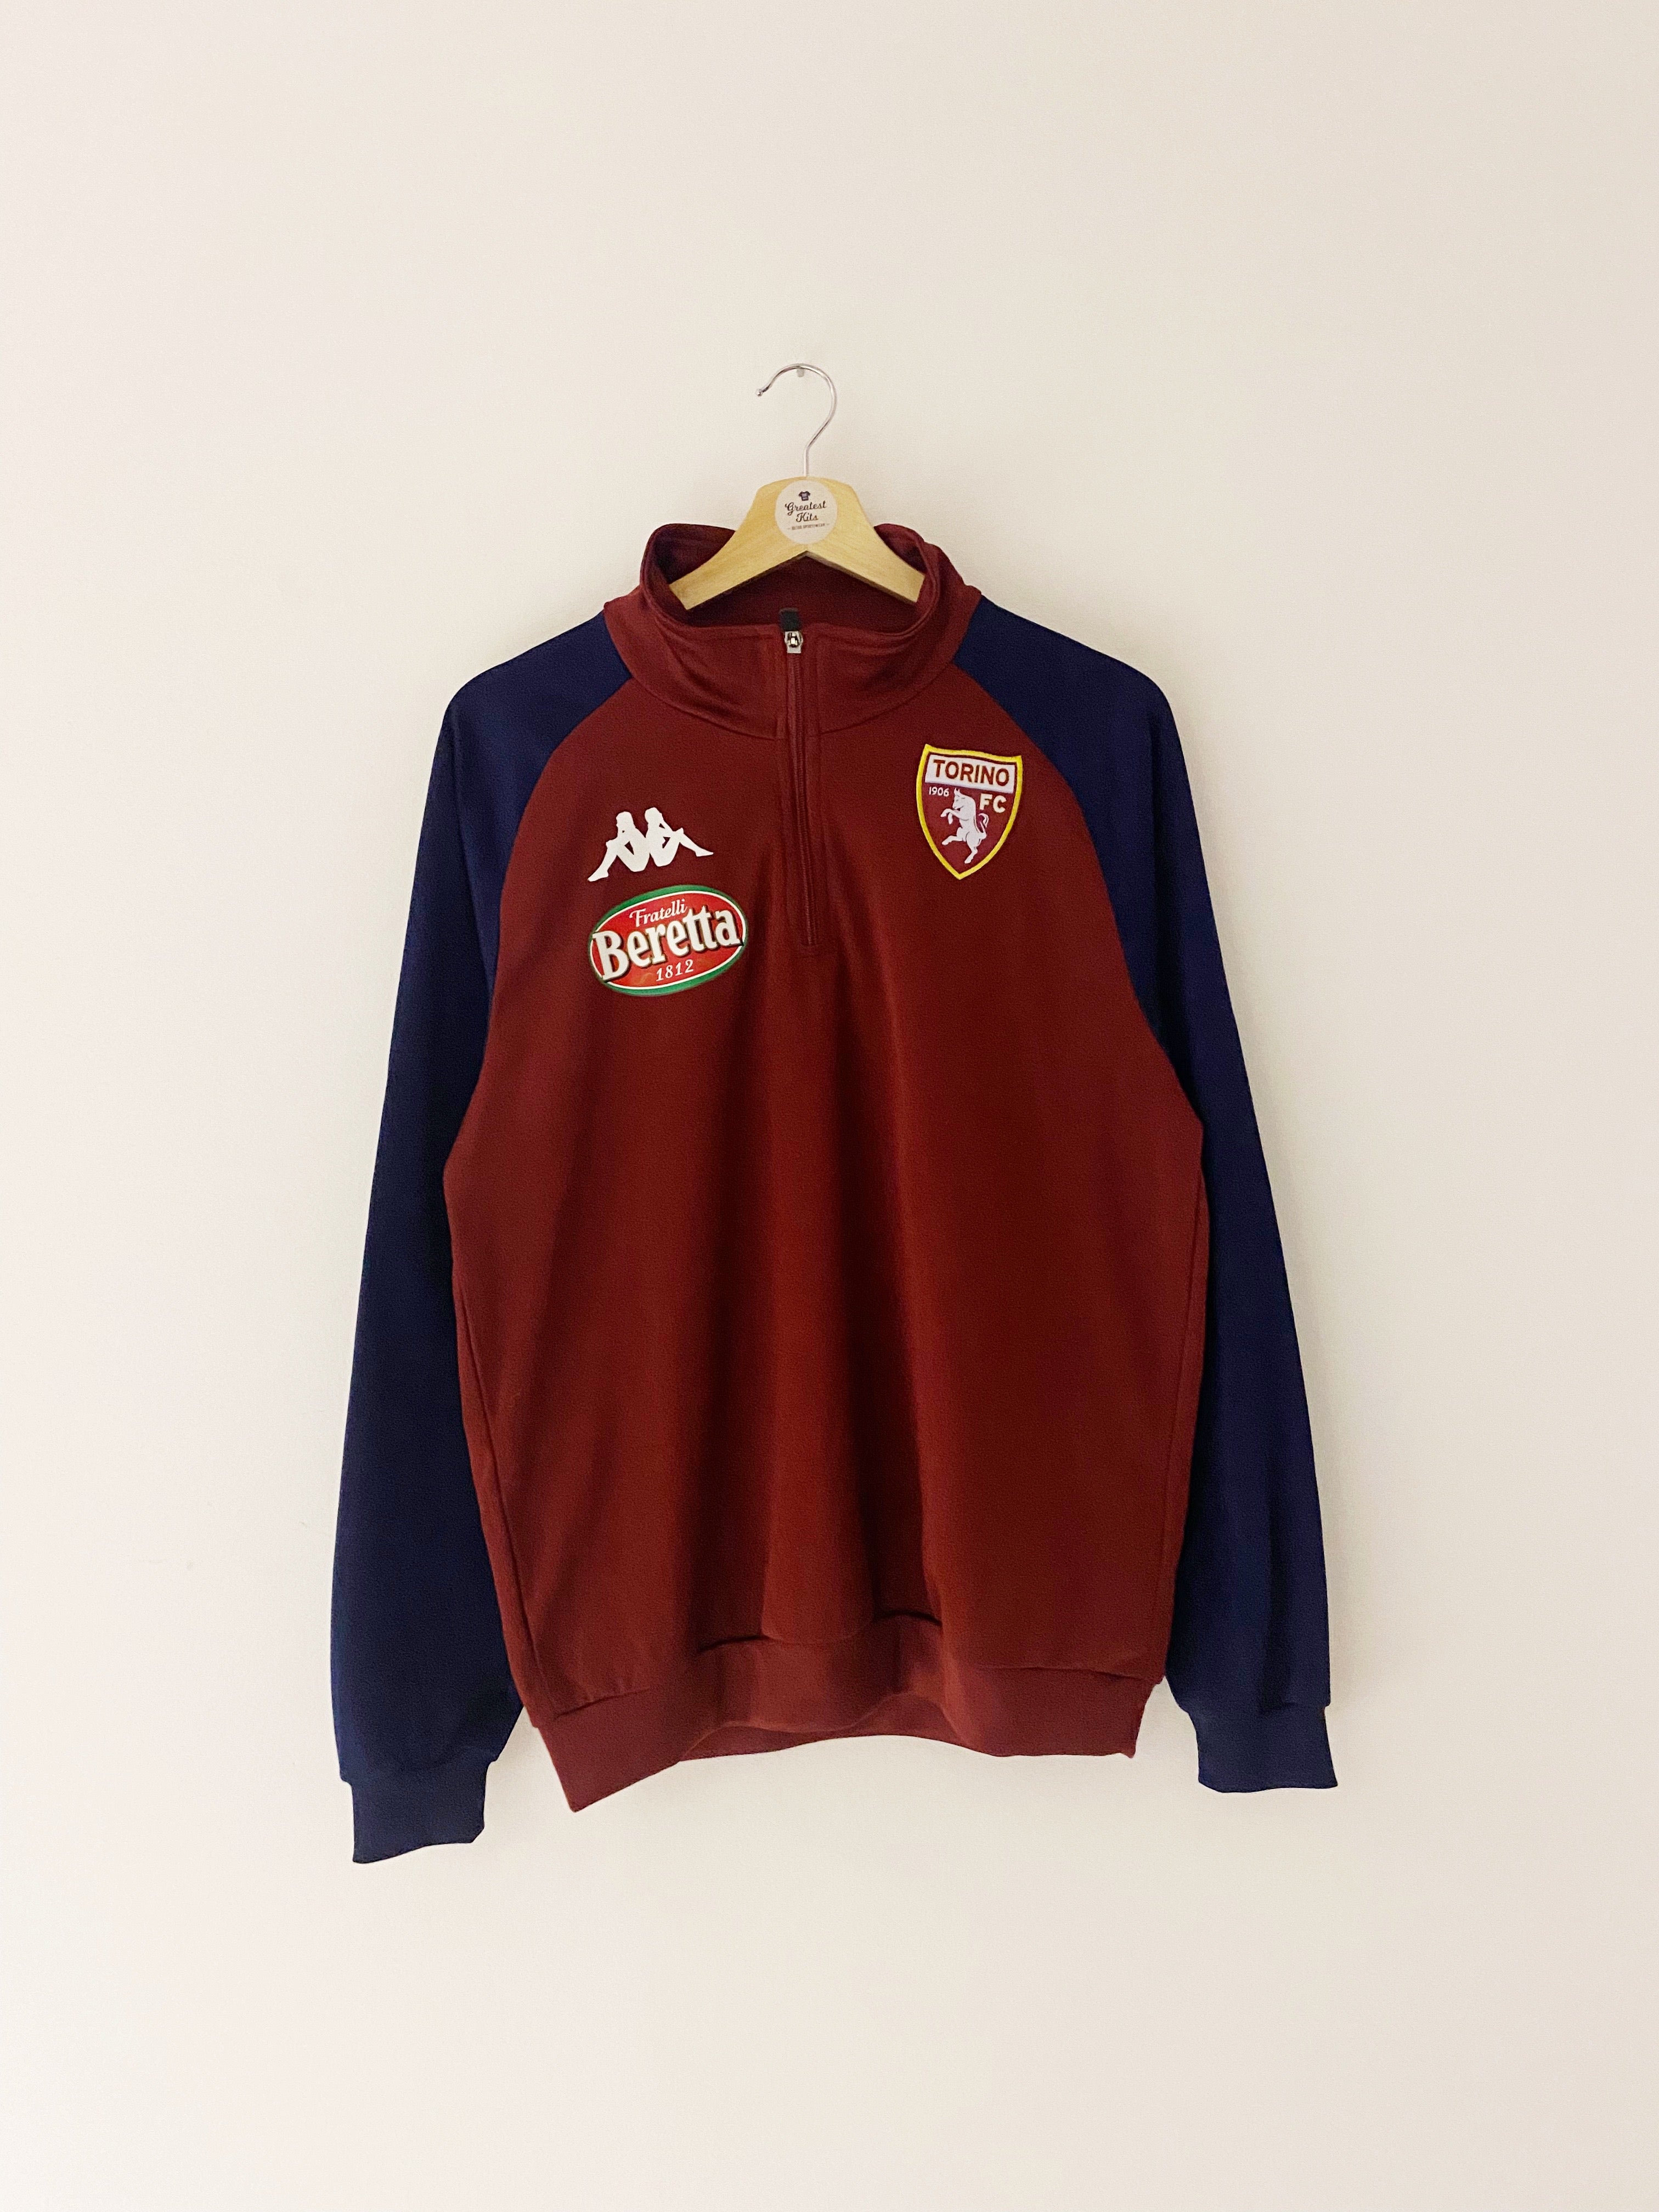 2018/19 Torino Training Jacket (M) 9/10